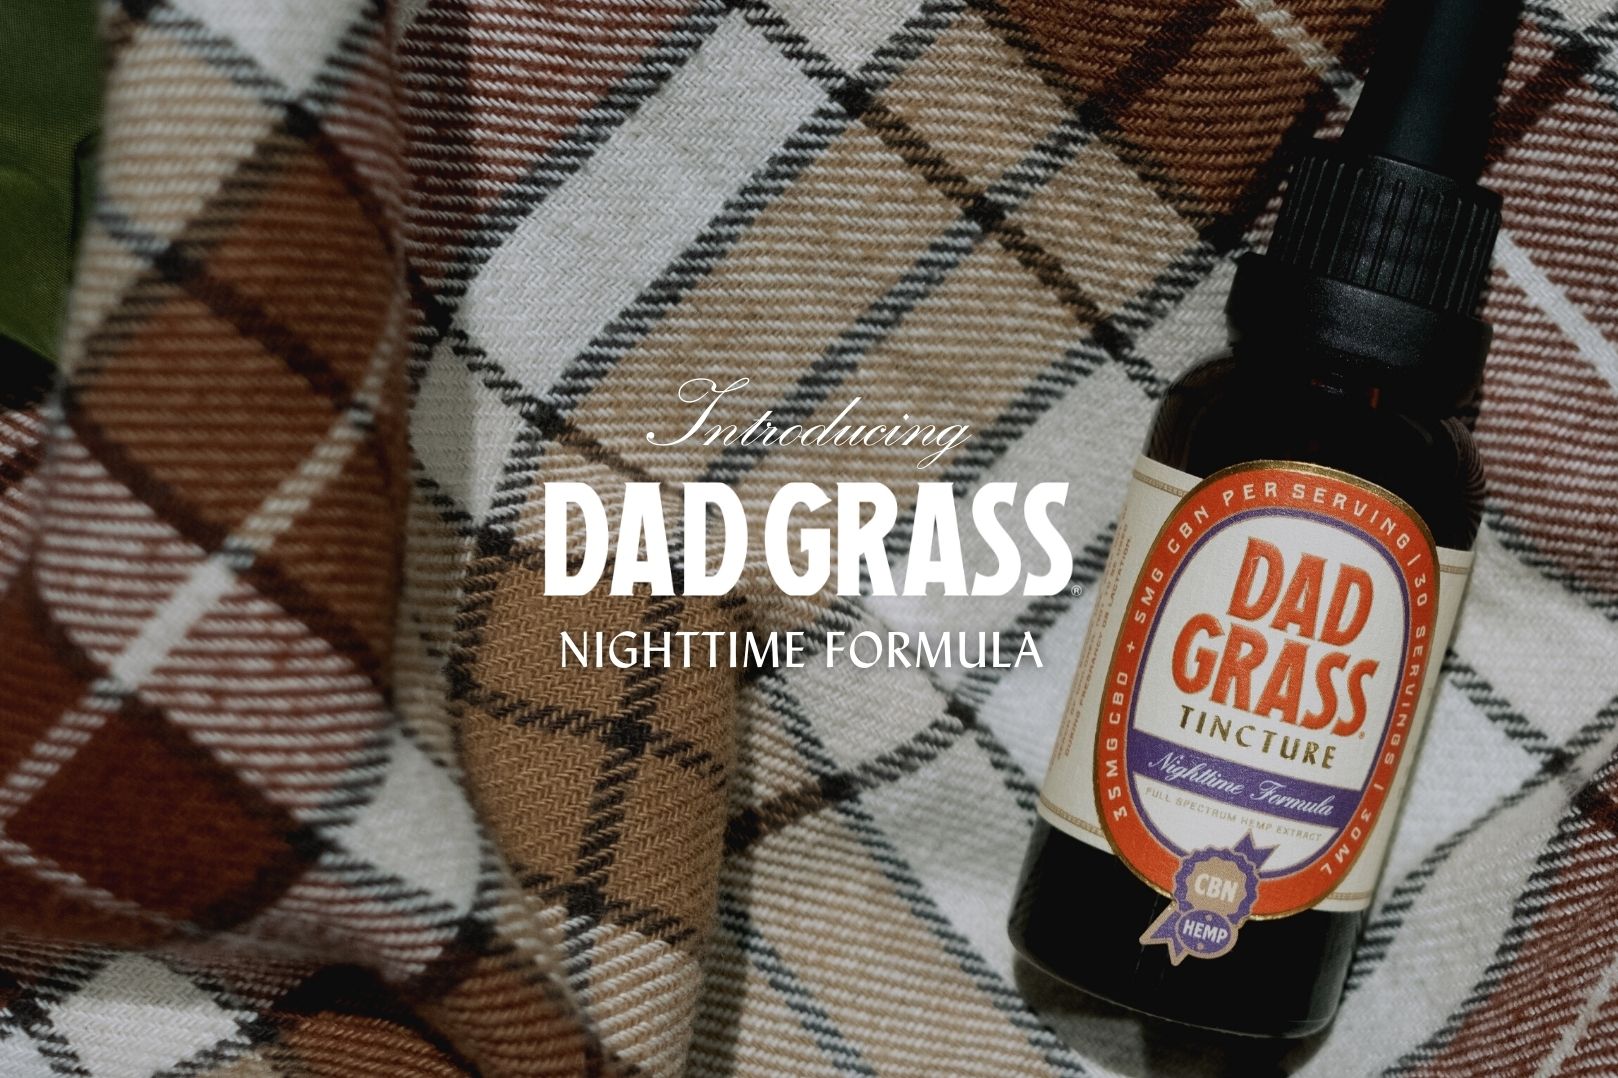 Introducing Dad Grass Nighttime Formula Cbd Cbn Tincture 7030